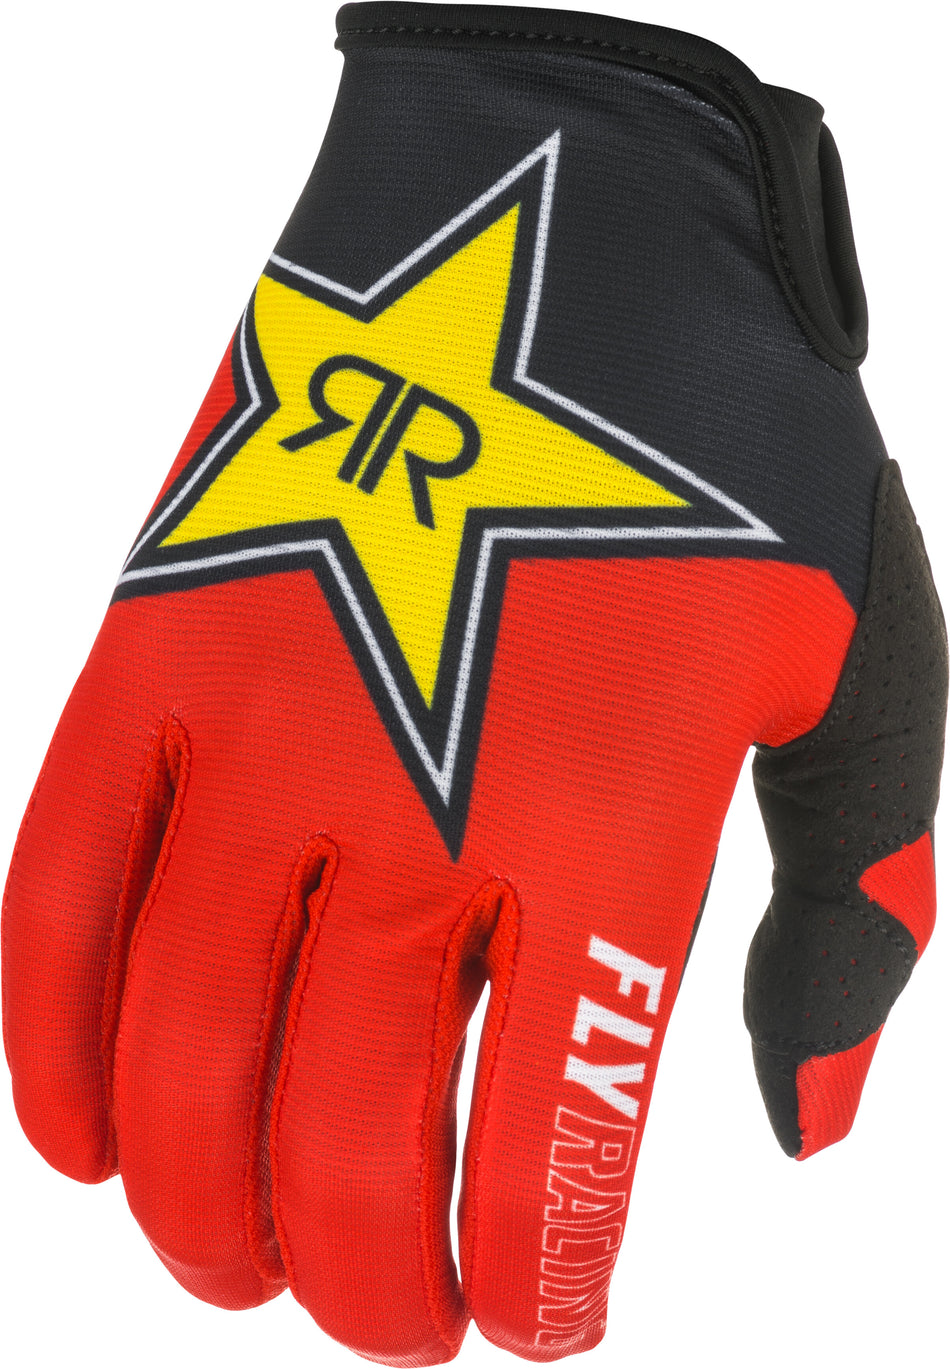 FLY RACING Lite Rockstar Gloves Black/Red/Yellow Sz 10 374-01310